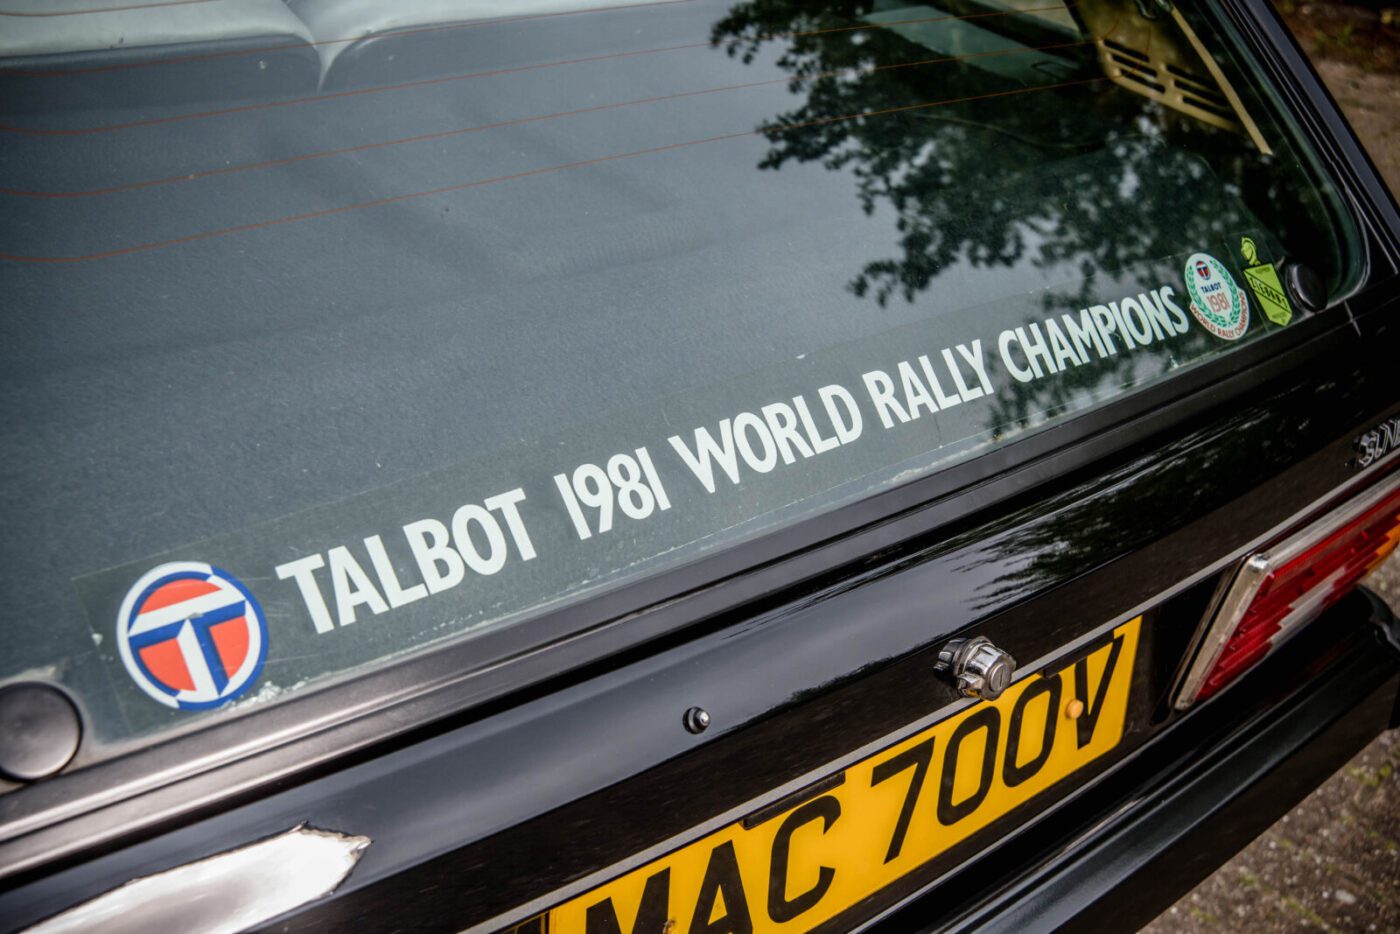 Talbot 1981 World Rally champions